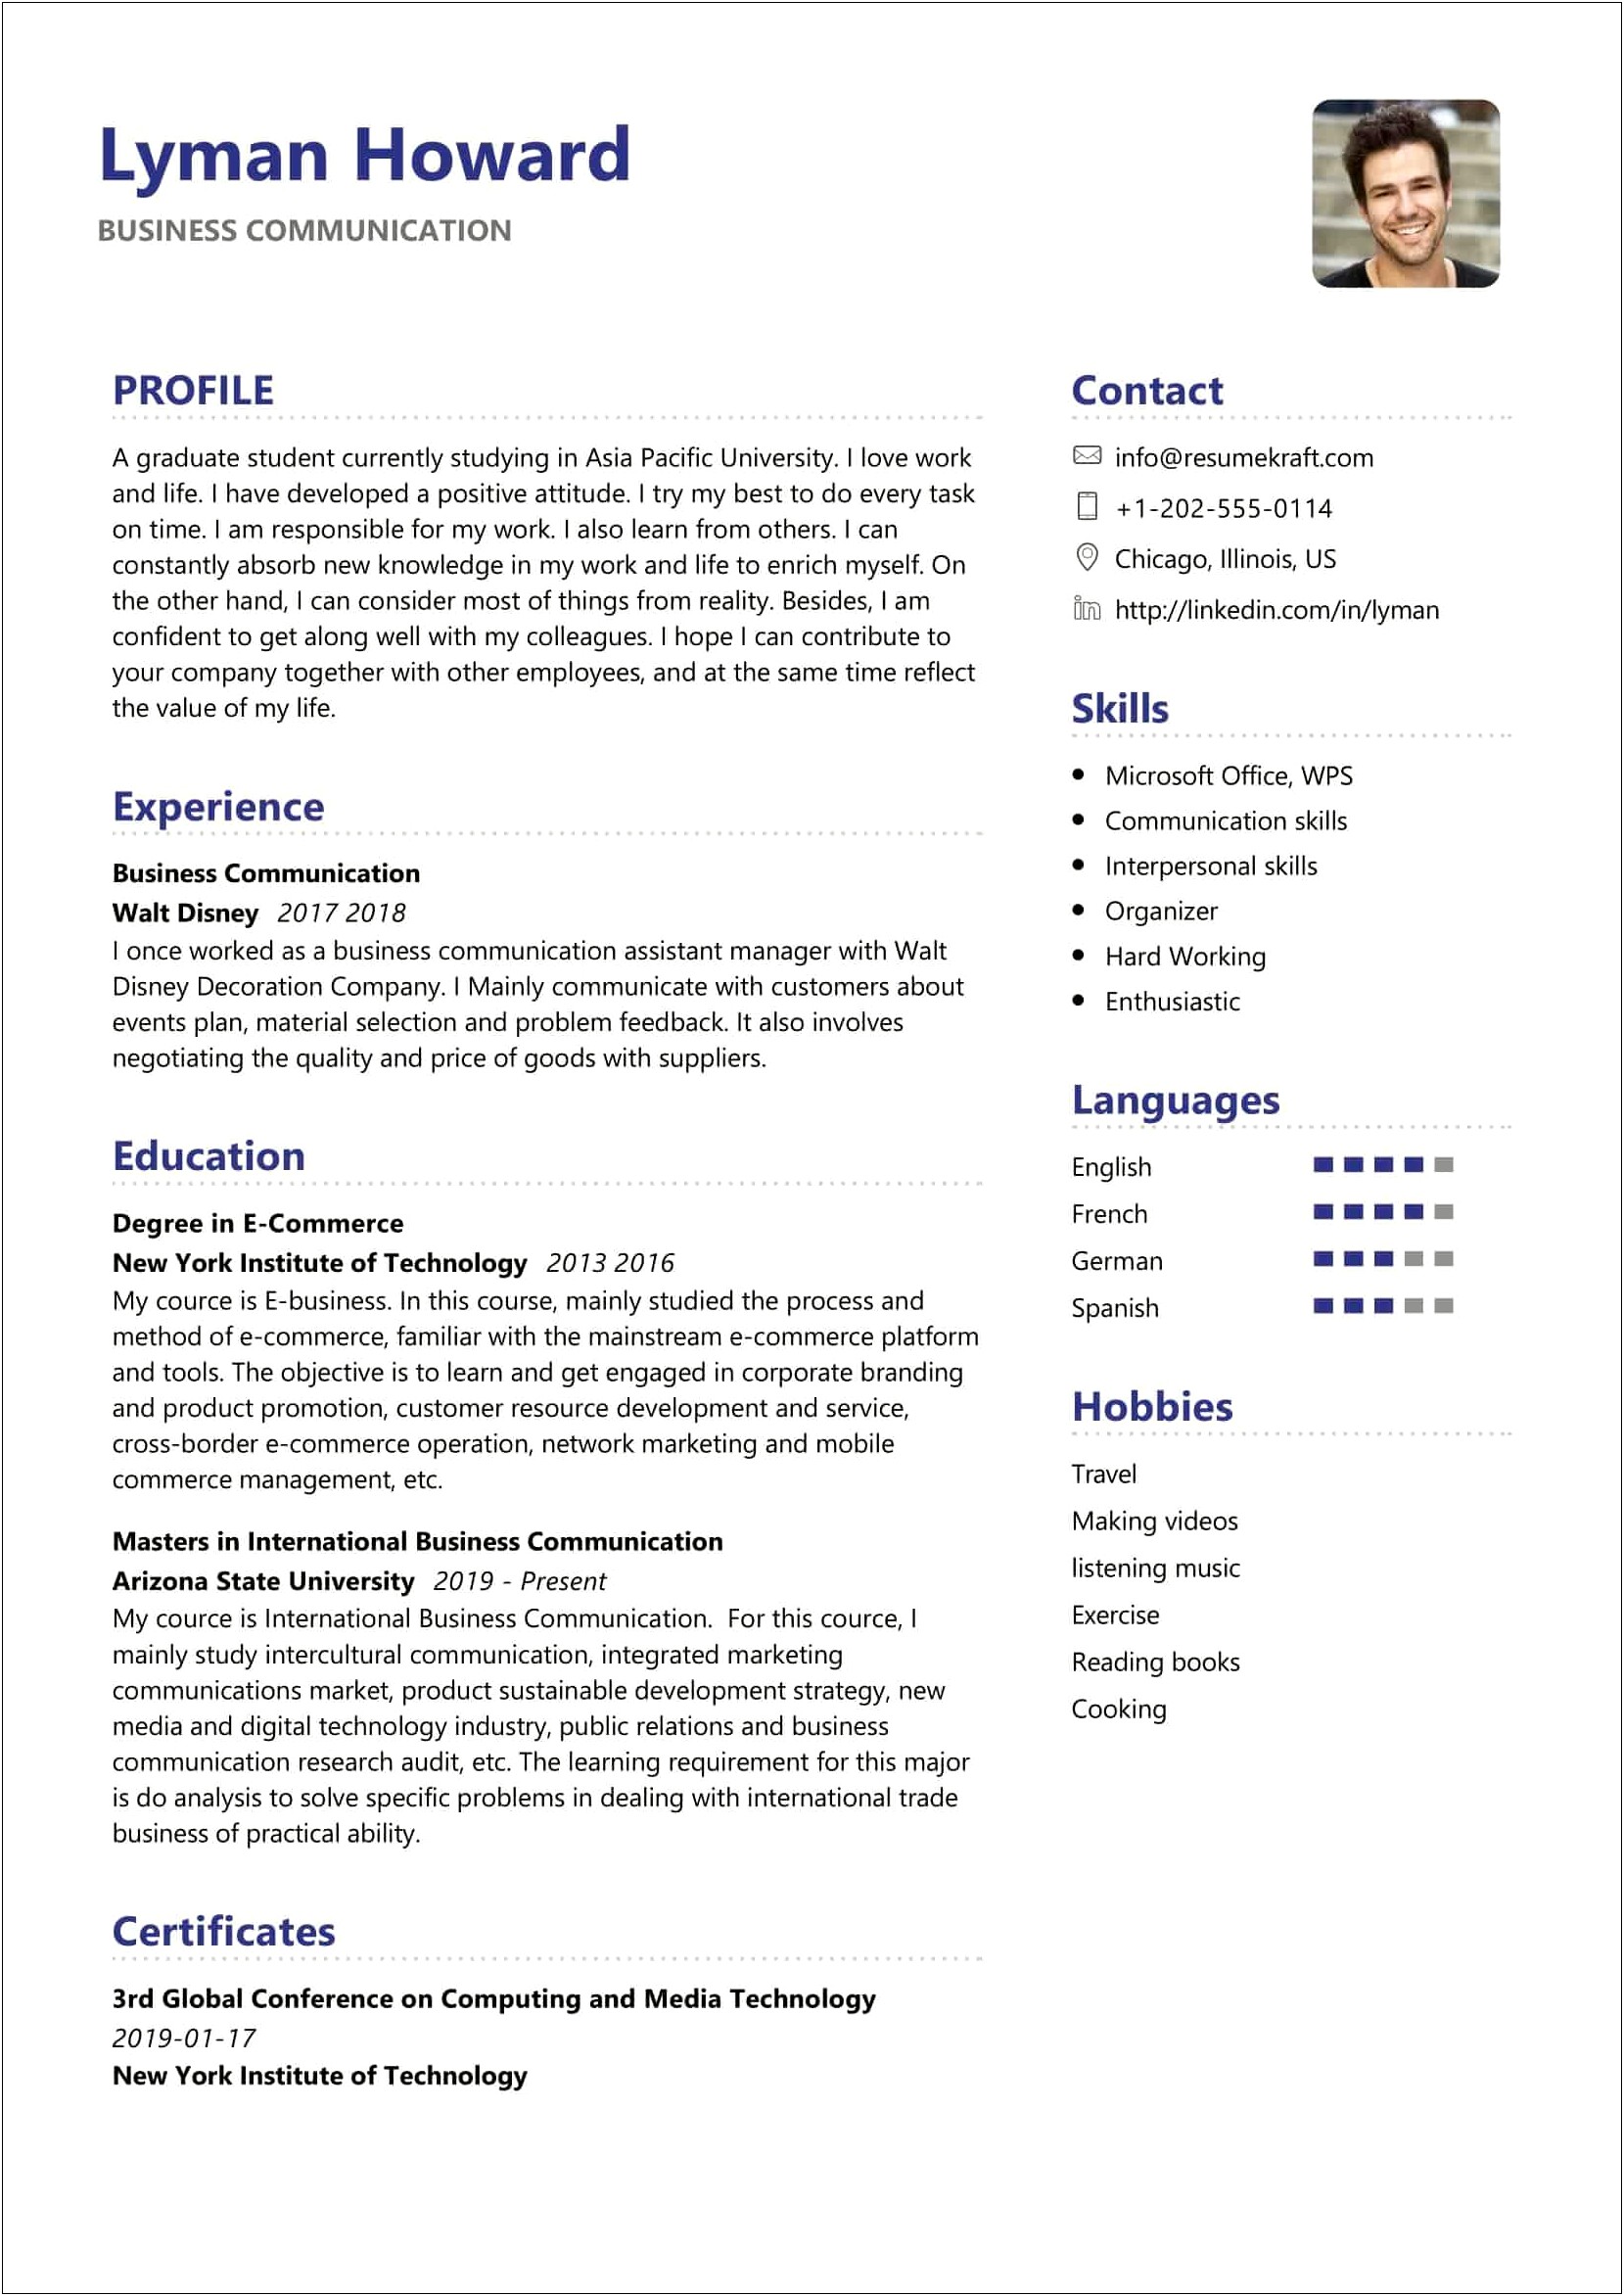 Business Analyst In Pri Resume Sample Download